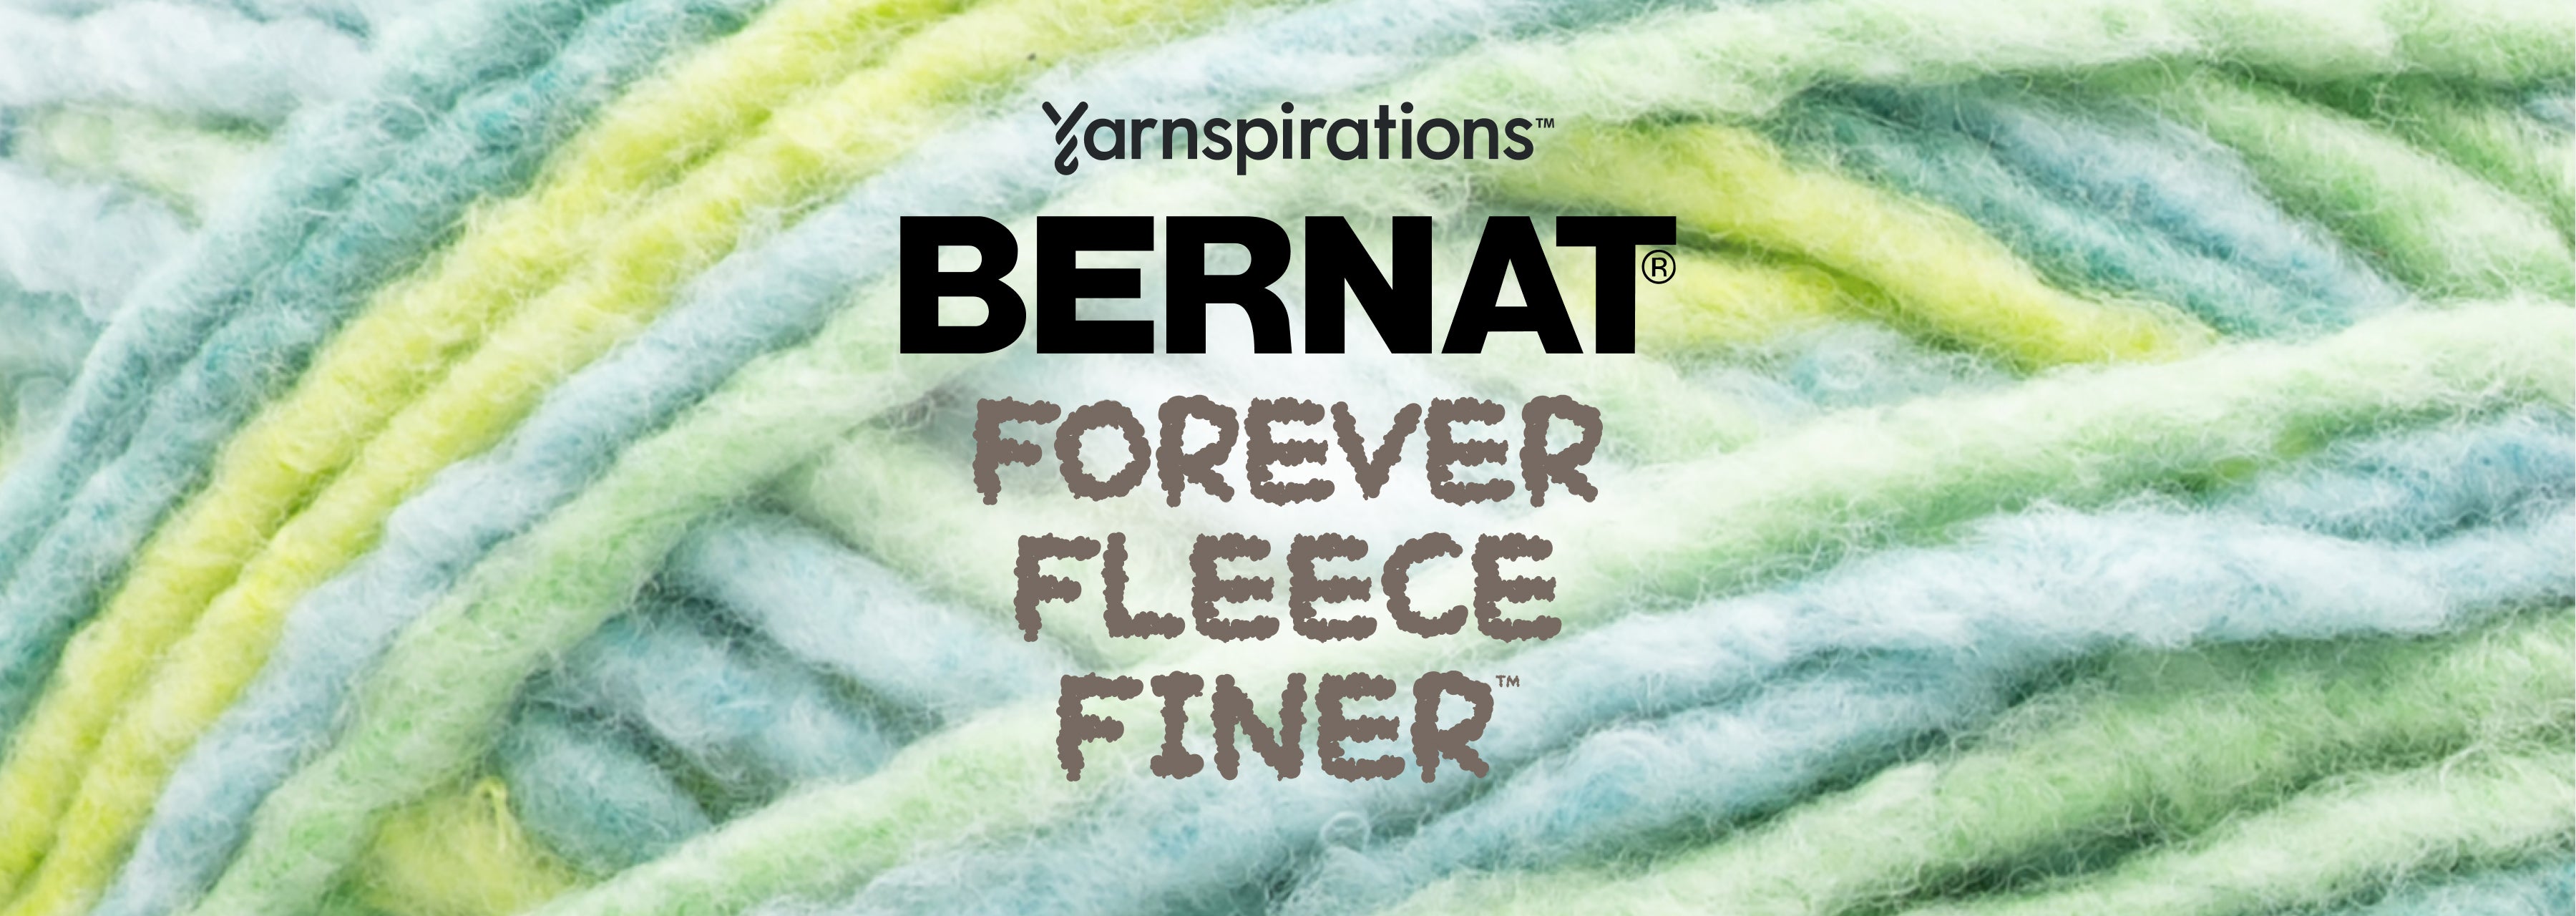 Introducing Bernat Blanket Extra Thick